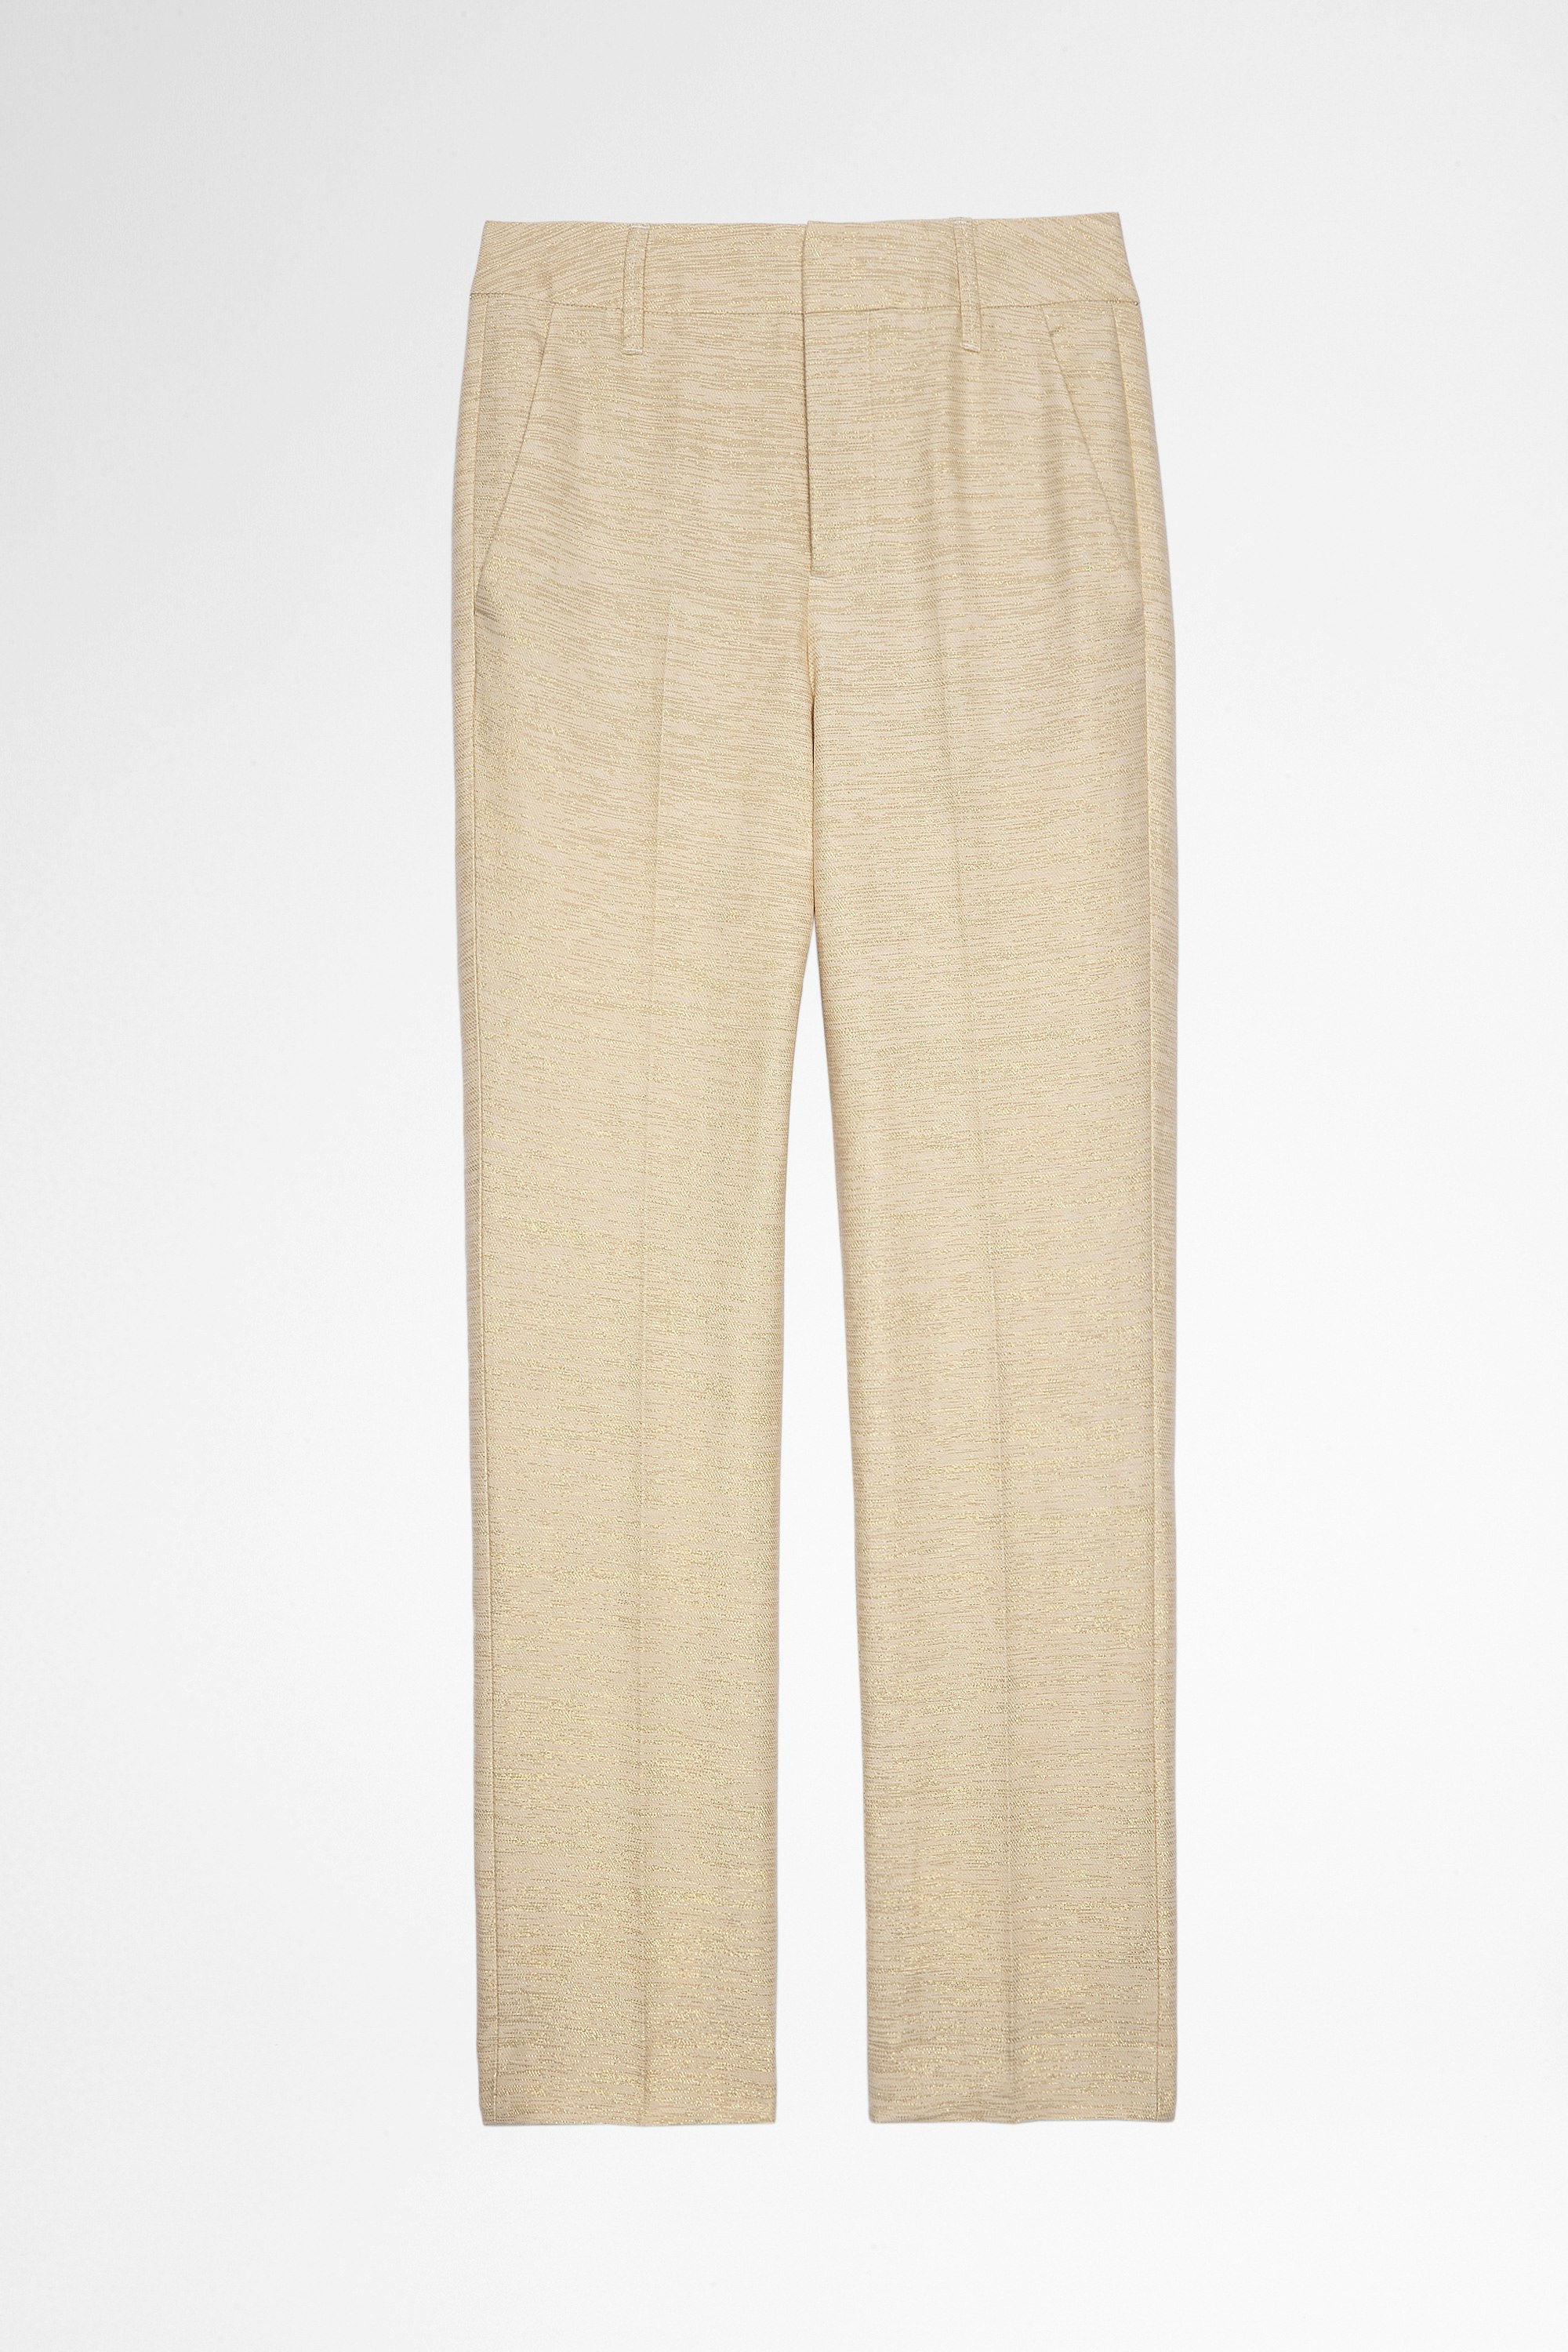 Posh Trousers Leinen Women's linen trousers in beige with gold metallic threads